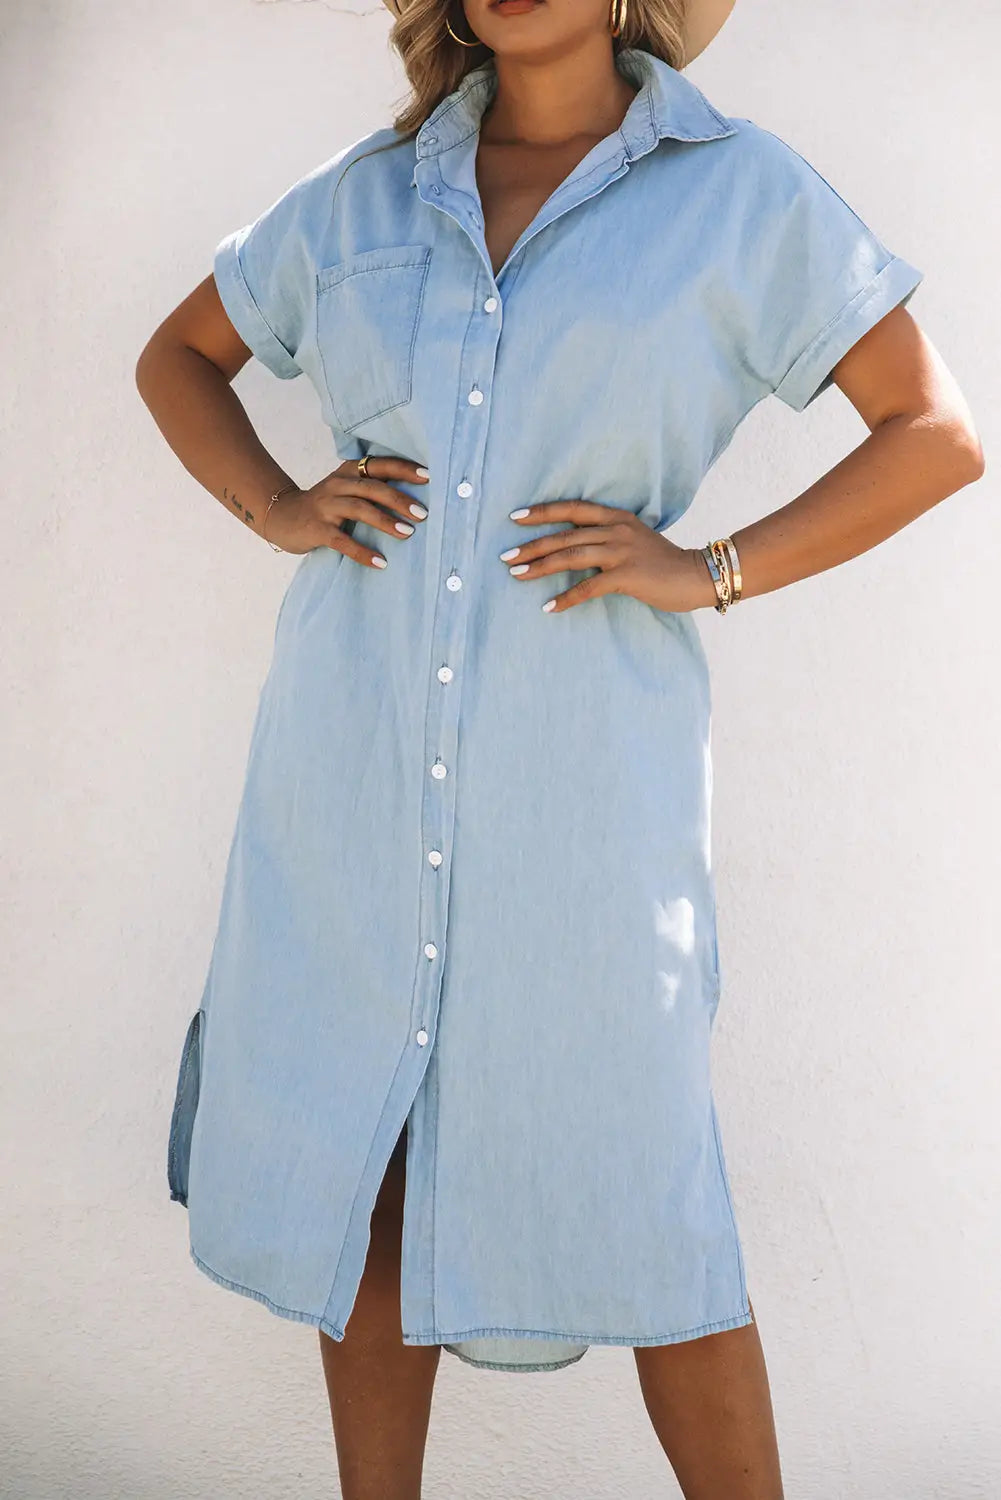 Sky blue chambray shirt short sleeves midi dress - dresses